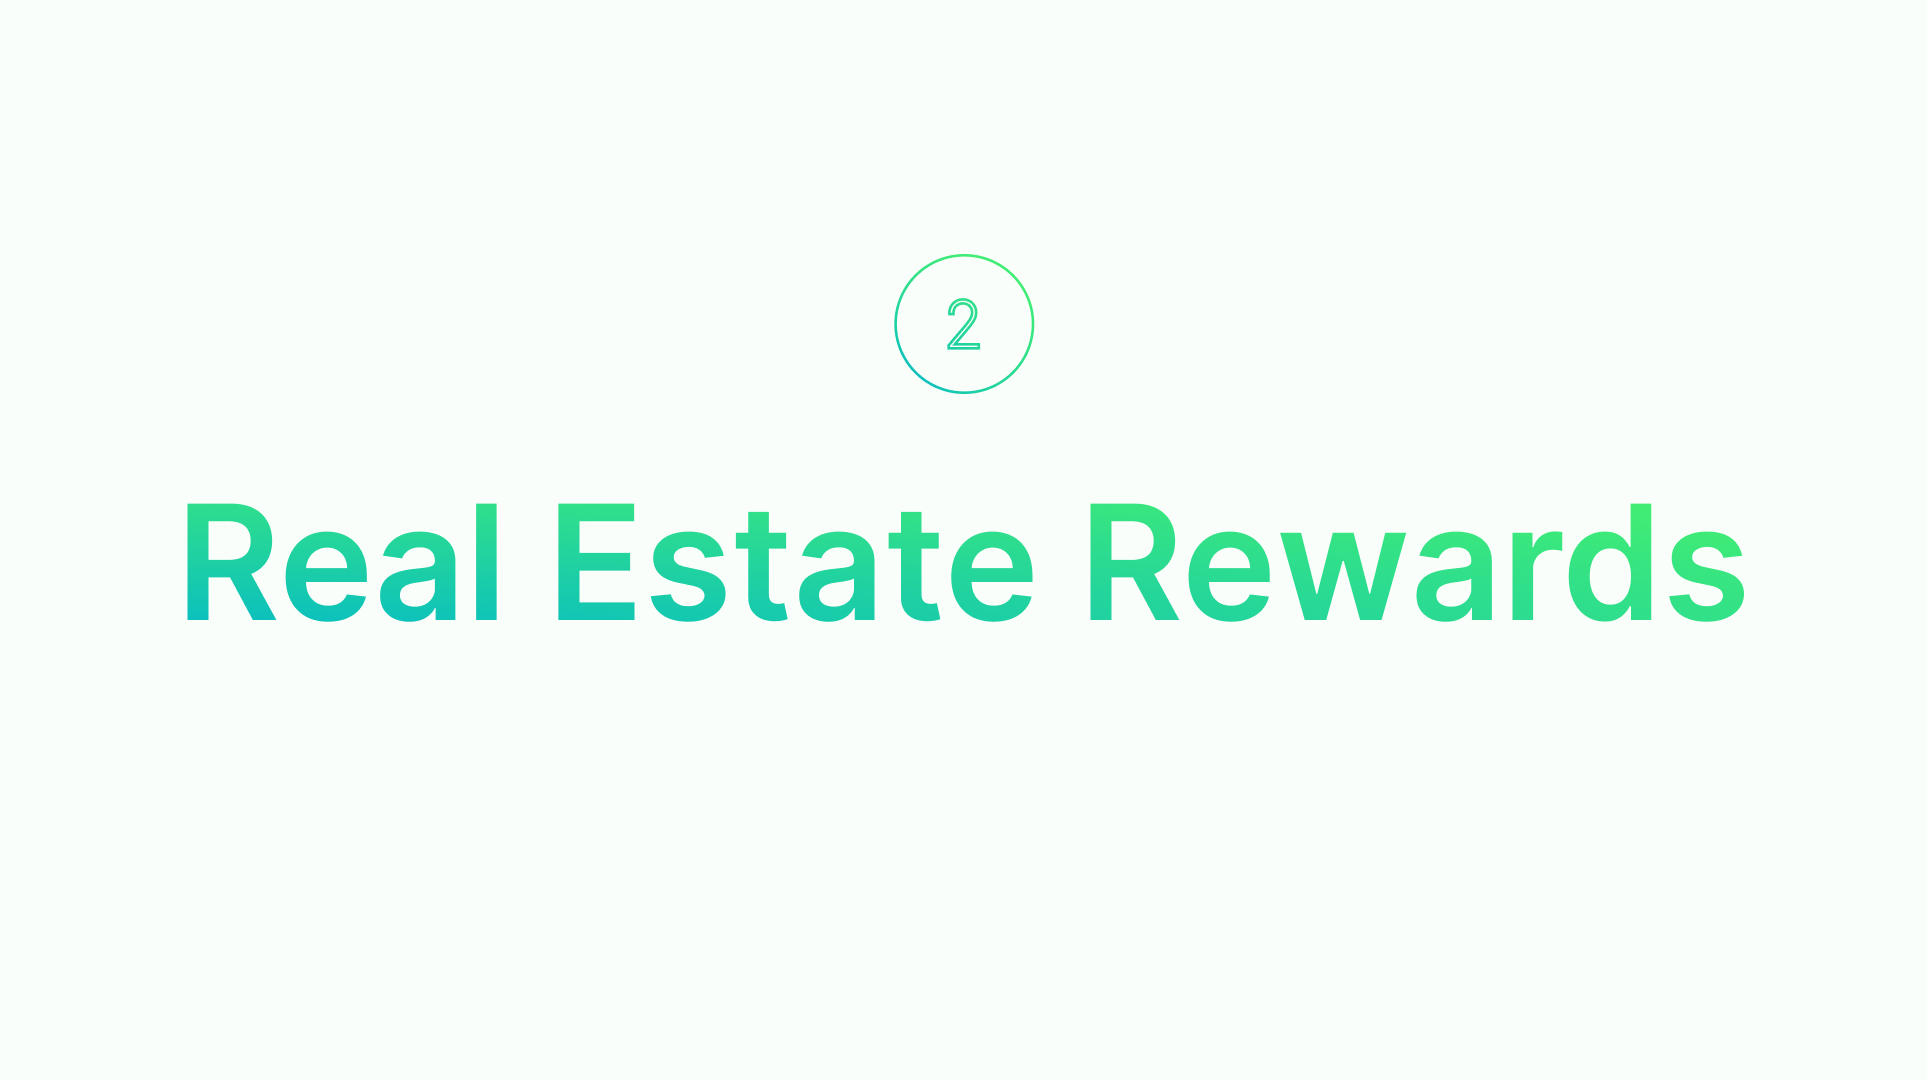 Real Estate Rewards